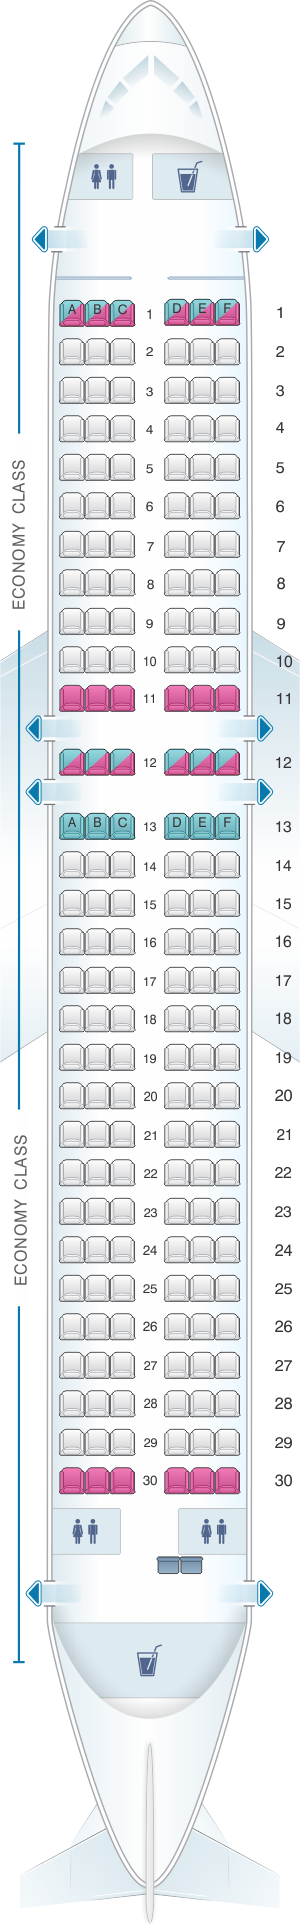 Indigo Airbus A320 Seat Map